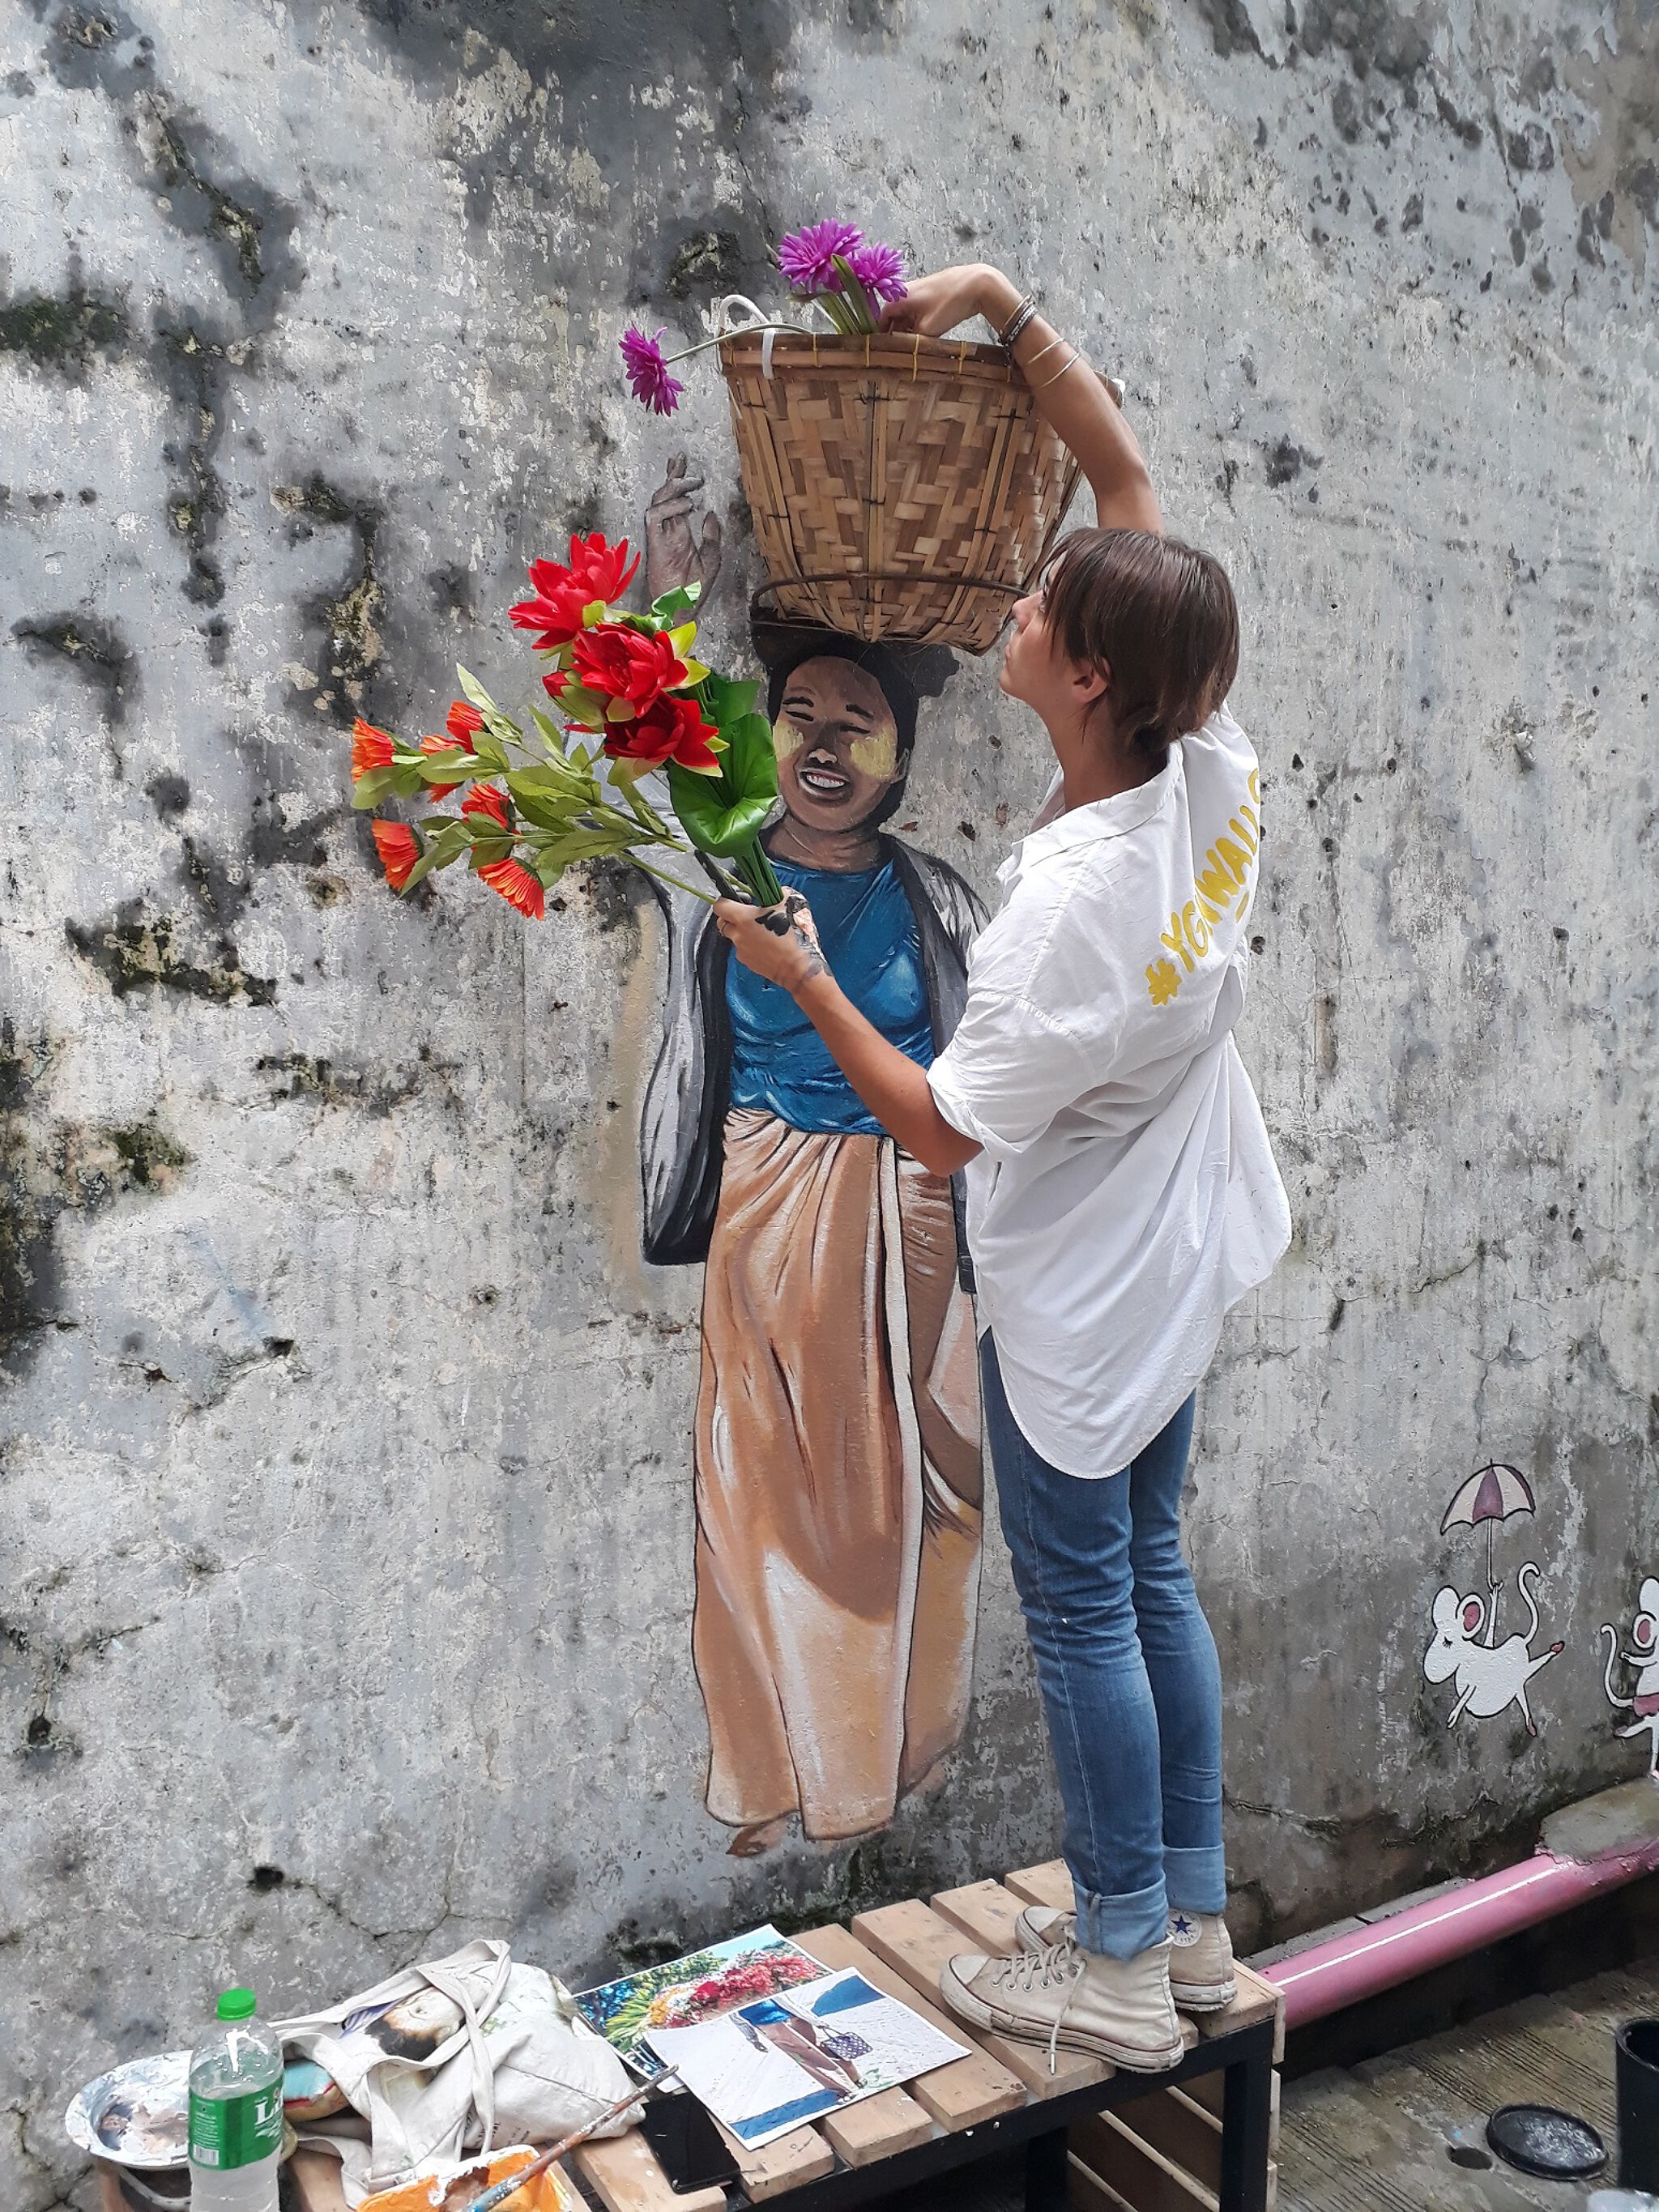 angele de lorme&mdash;Pan Thae aunty and her flowers basket 